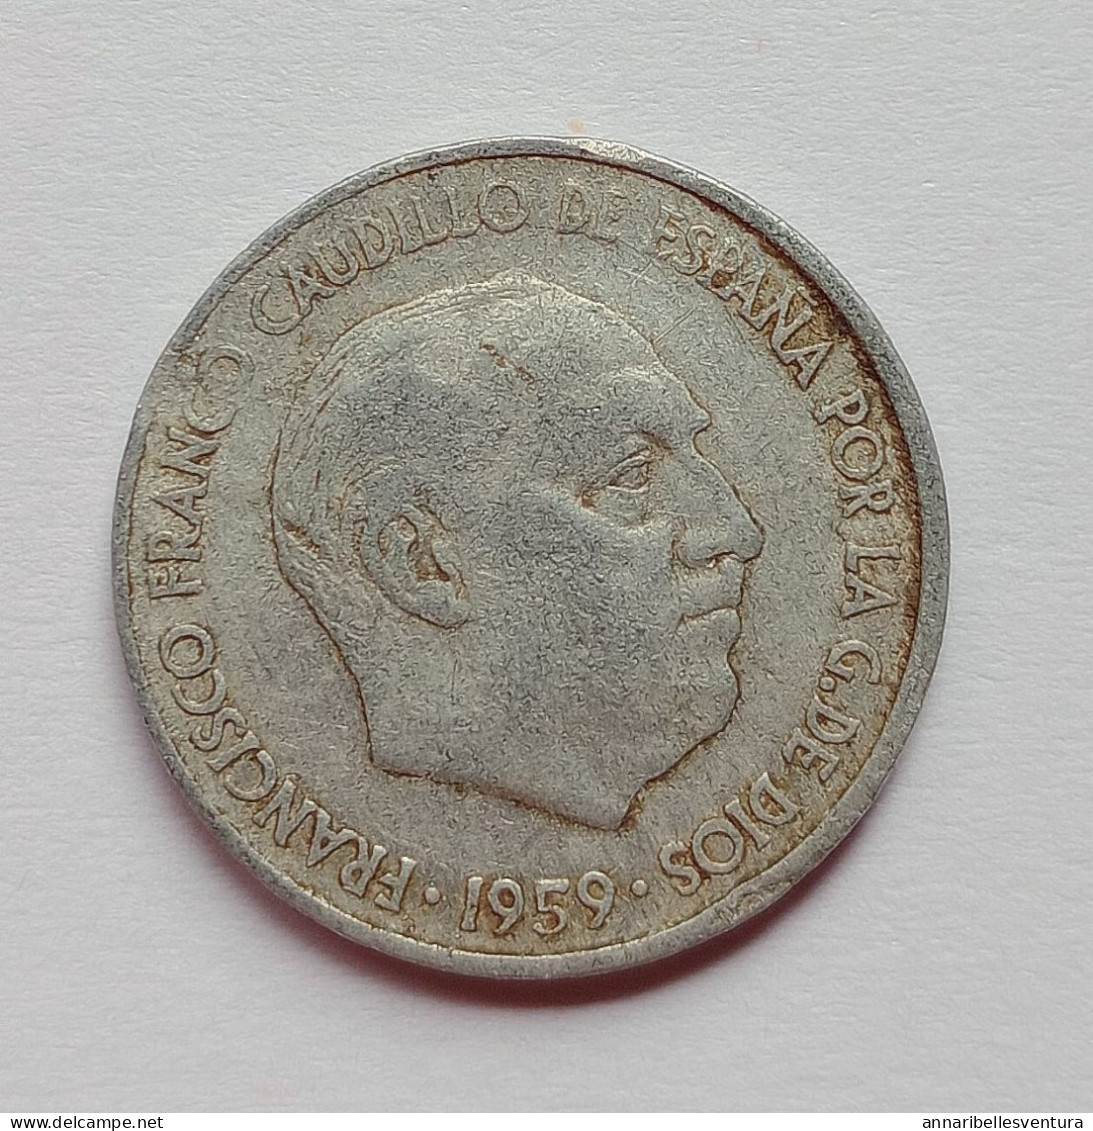 10 CÉNTIMOS 1959. FRANCISCO FRANCO. - 10 Centesimi